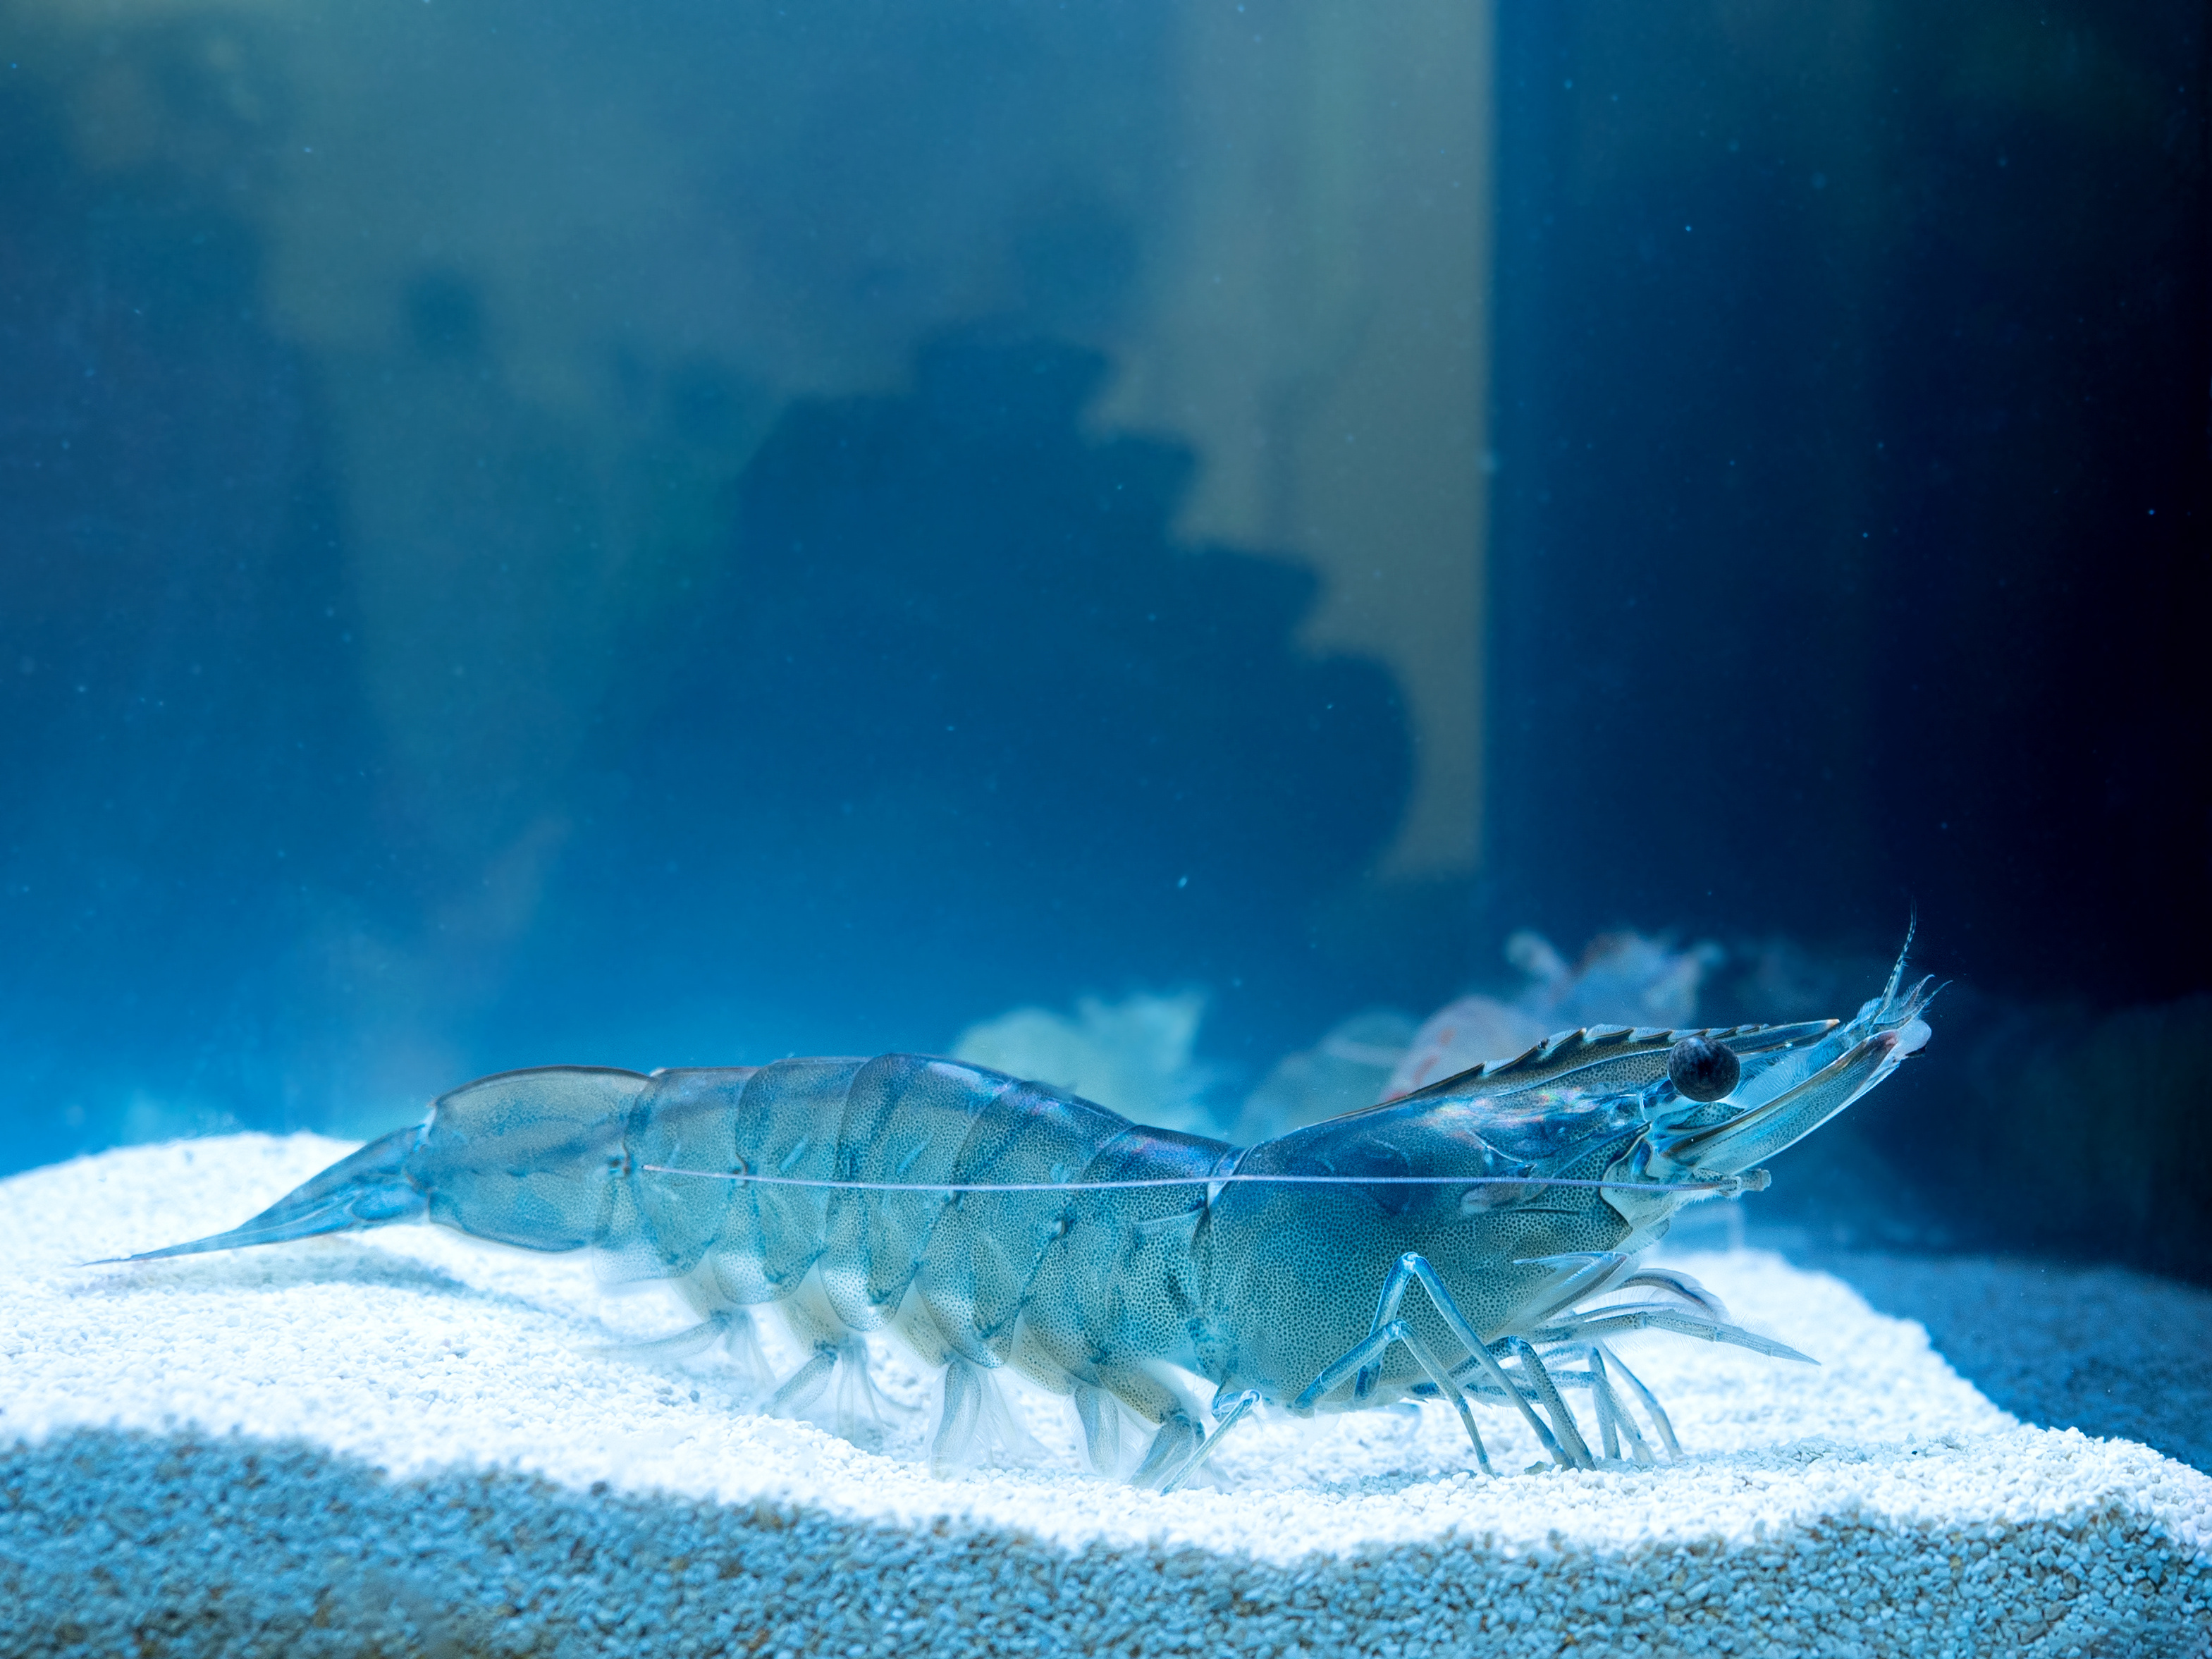 Vannamei shrimp, whiteleg shrimp, Pacific white shrimp or king prawn swimming in the aquarium tank. Close-up.